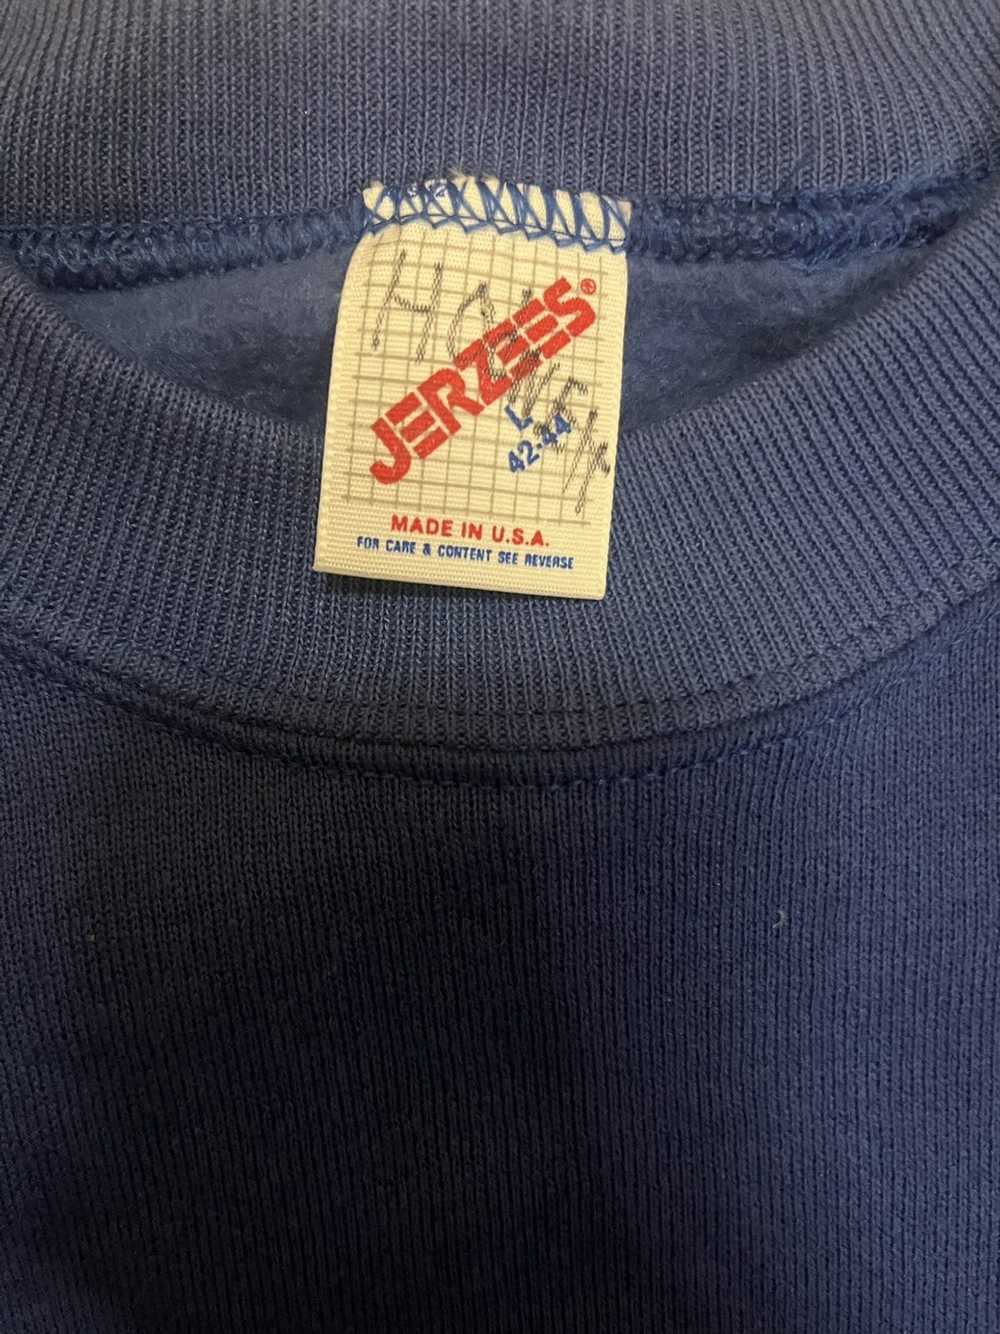 Jerzees × Vintage Vintage Blue Jerzees Sweatshirt - image 2